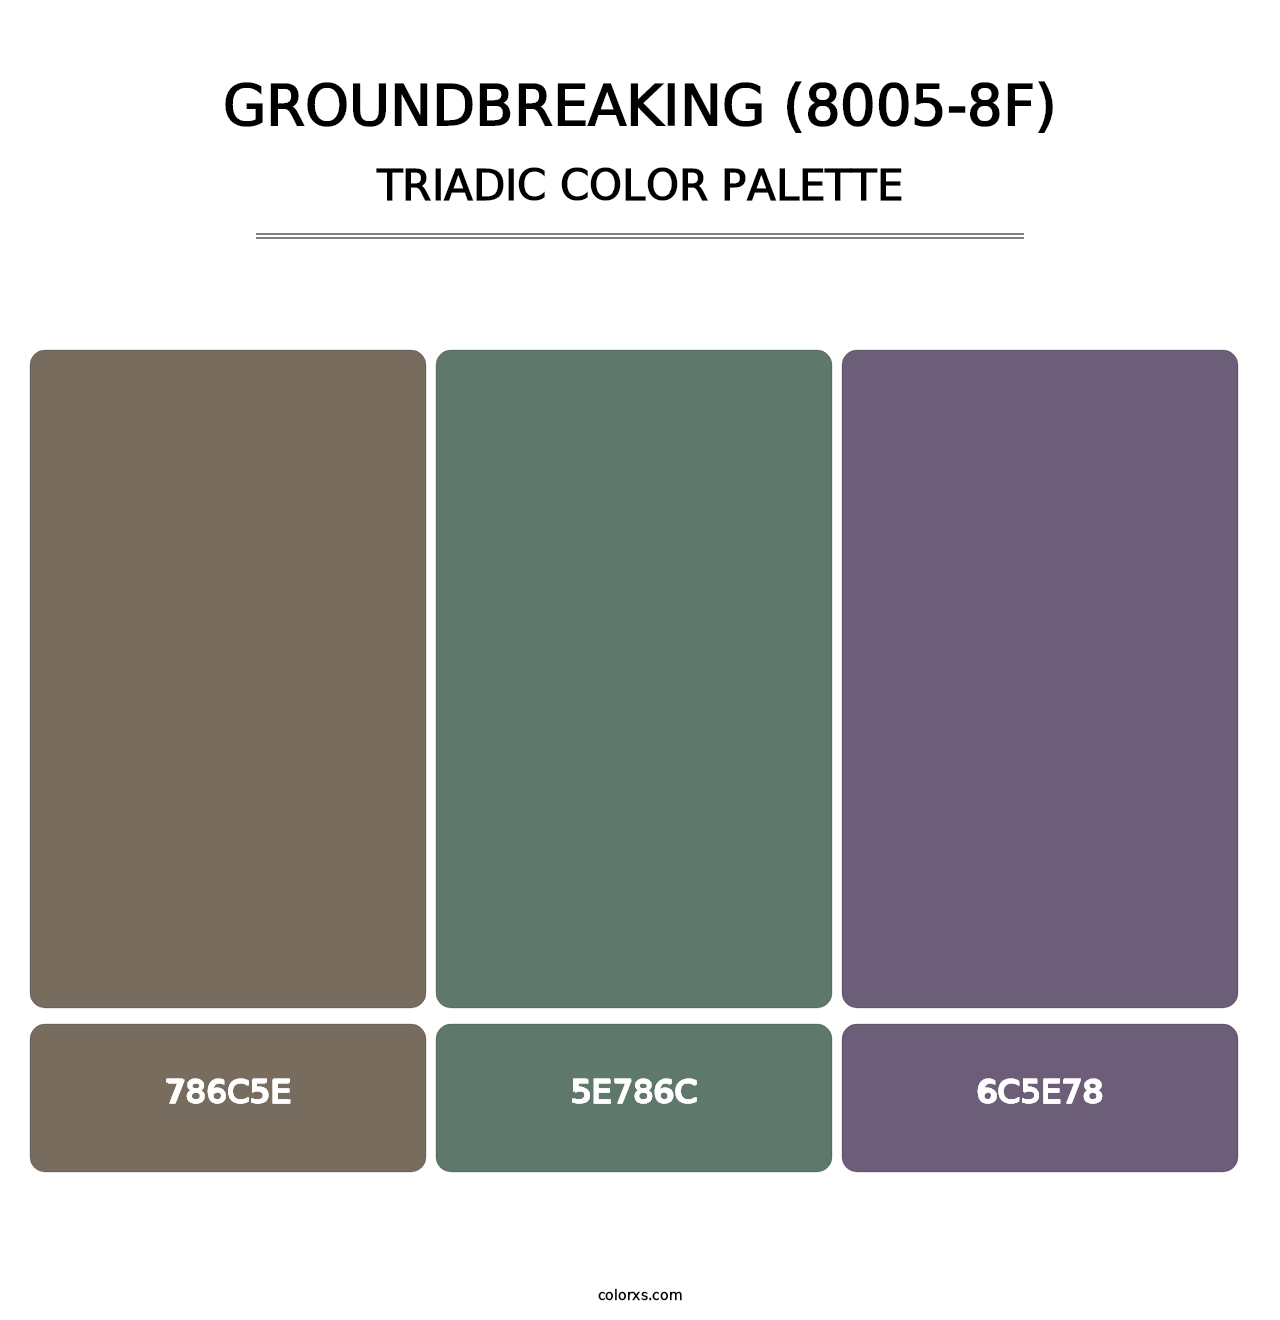 Groundbreaking (8005-8F) - Triadic Color Palette